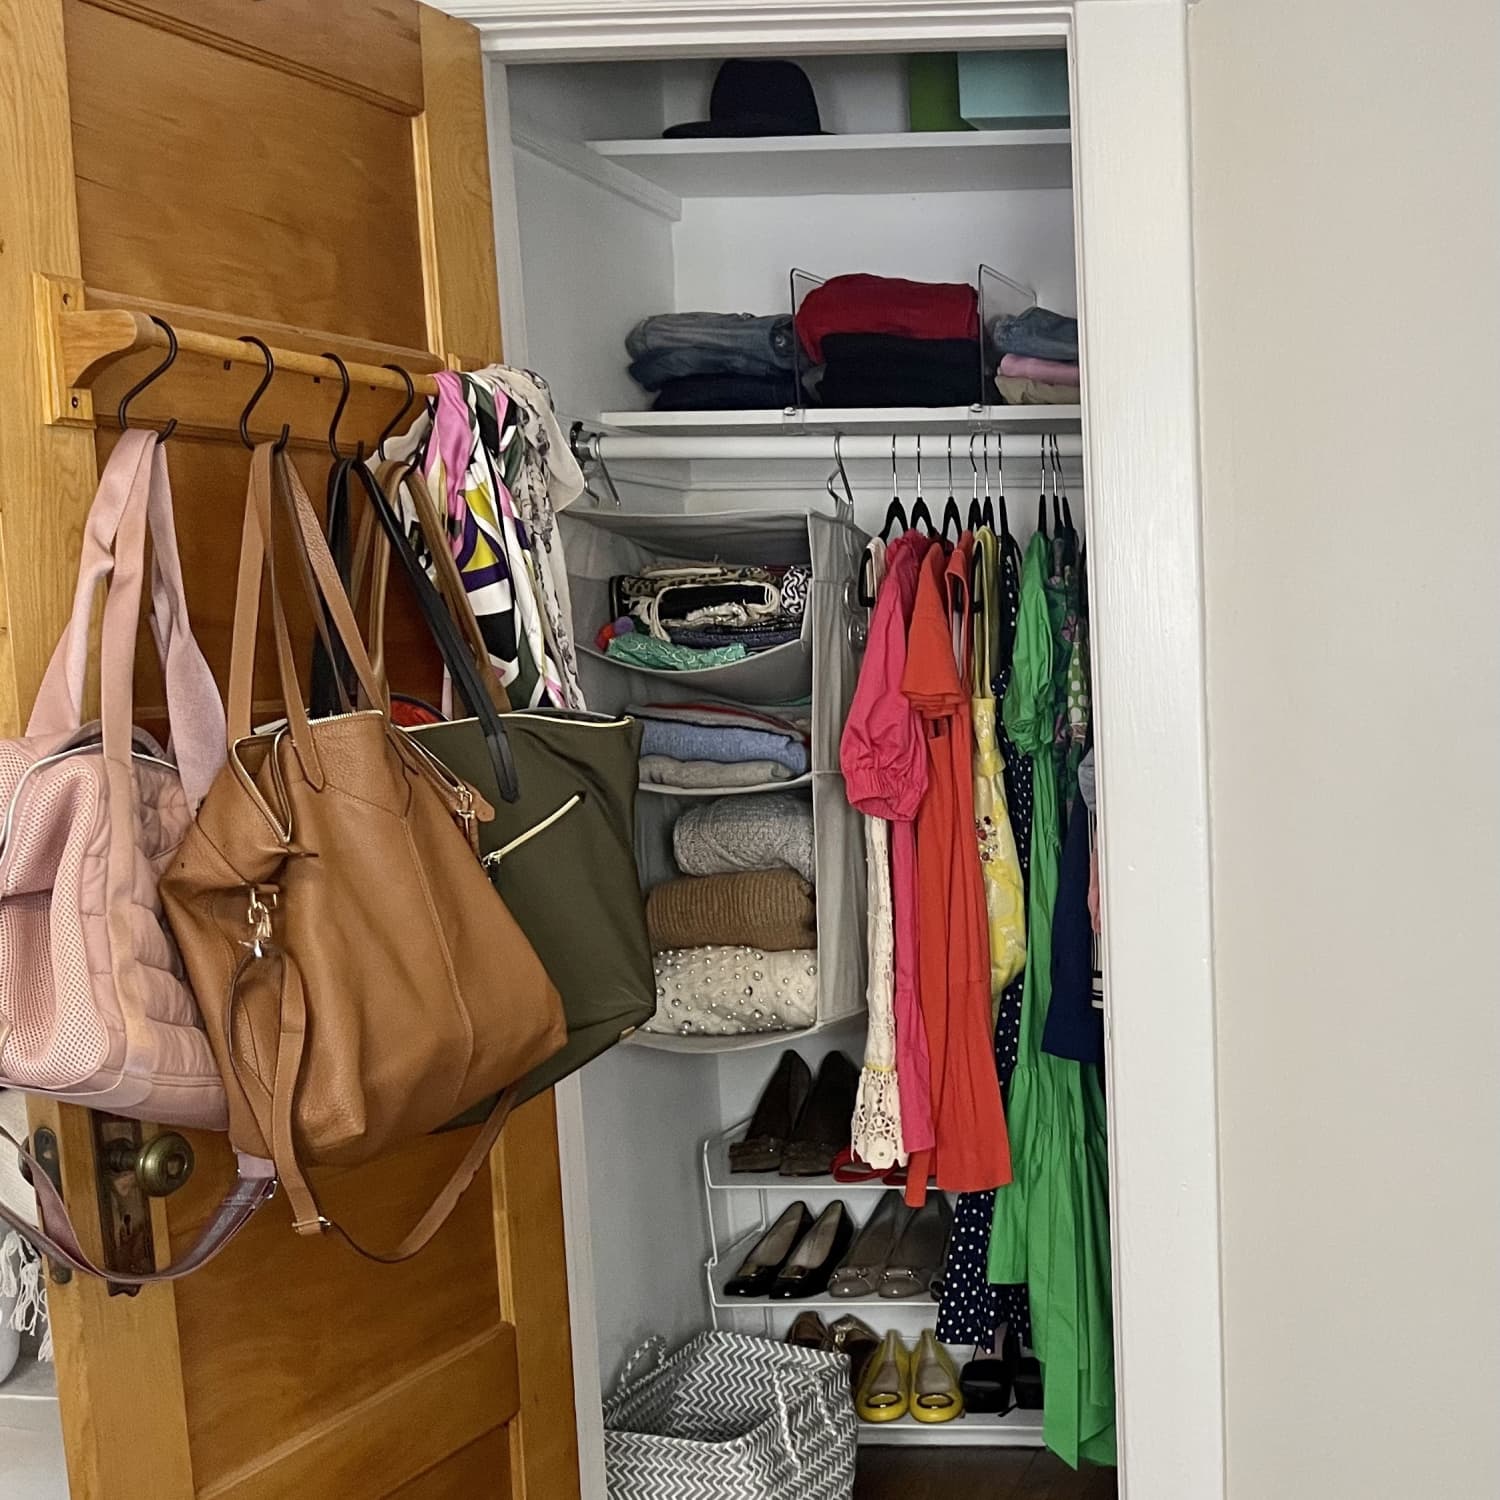 25 Life-Changing Ways to Organize Your Purses  Organizing purses in closet,  Purse storage, Purse organization